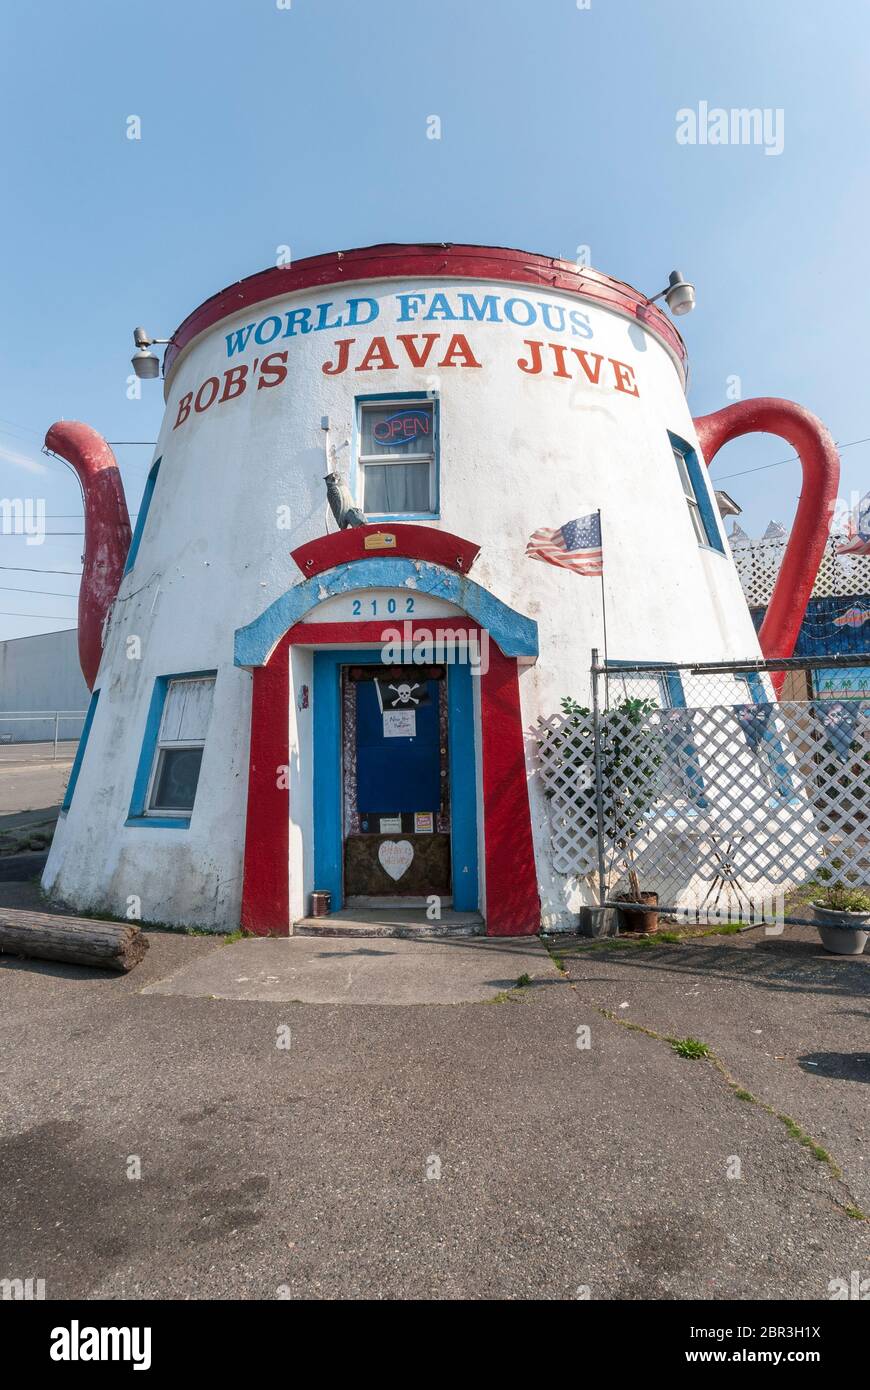 Weltberühmtes Bob's Java Jive Kaffeepot geformtes Restaurant in 2102 South Tacoma Way, in Tacoma Washington. Stockfoto